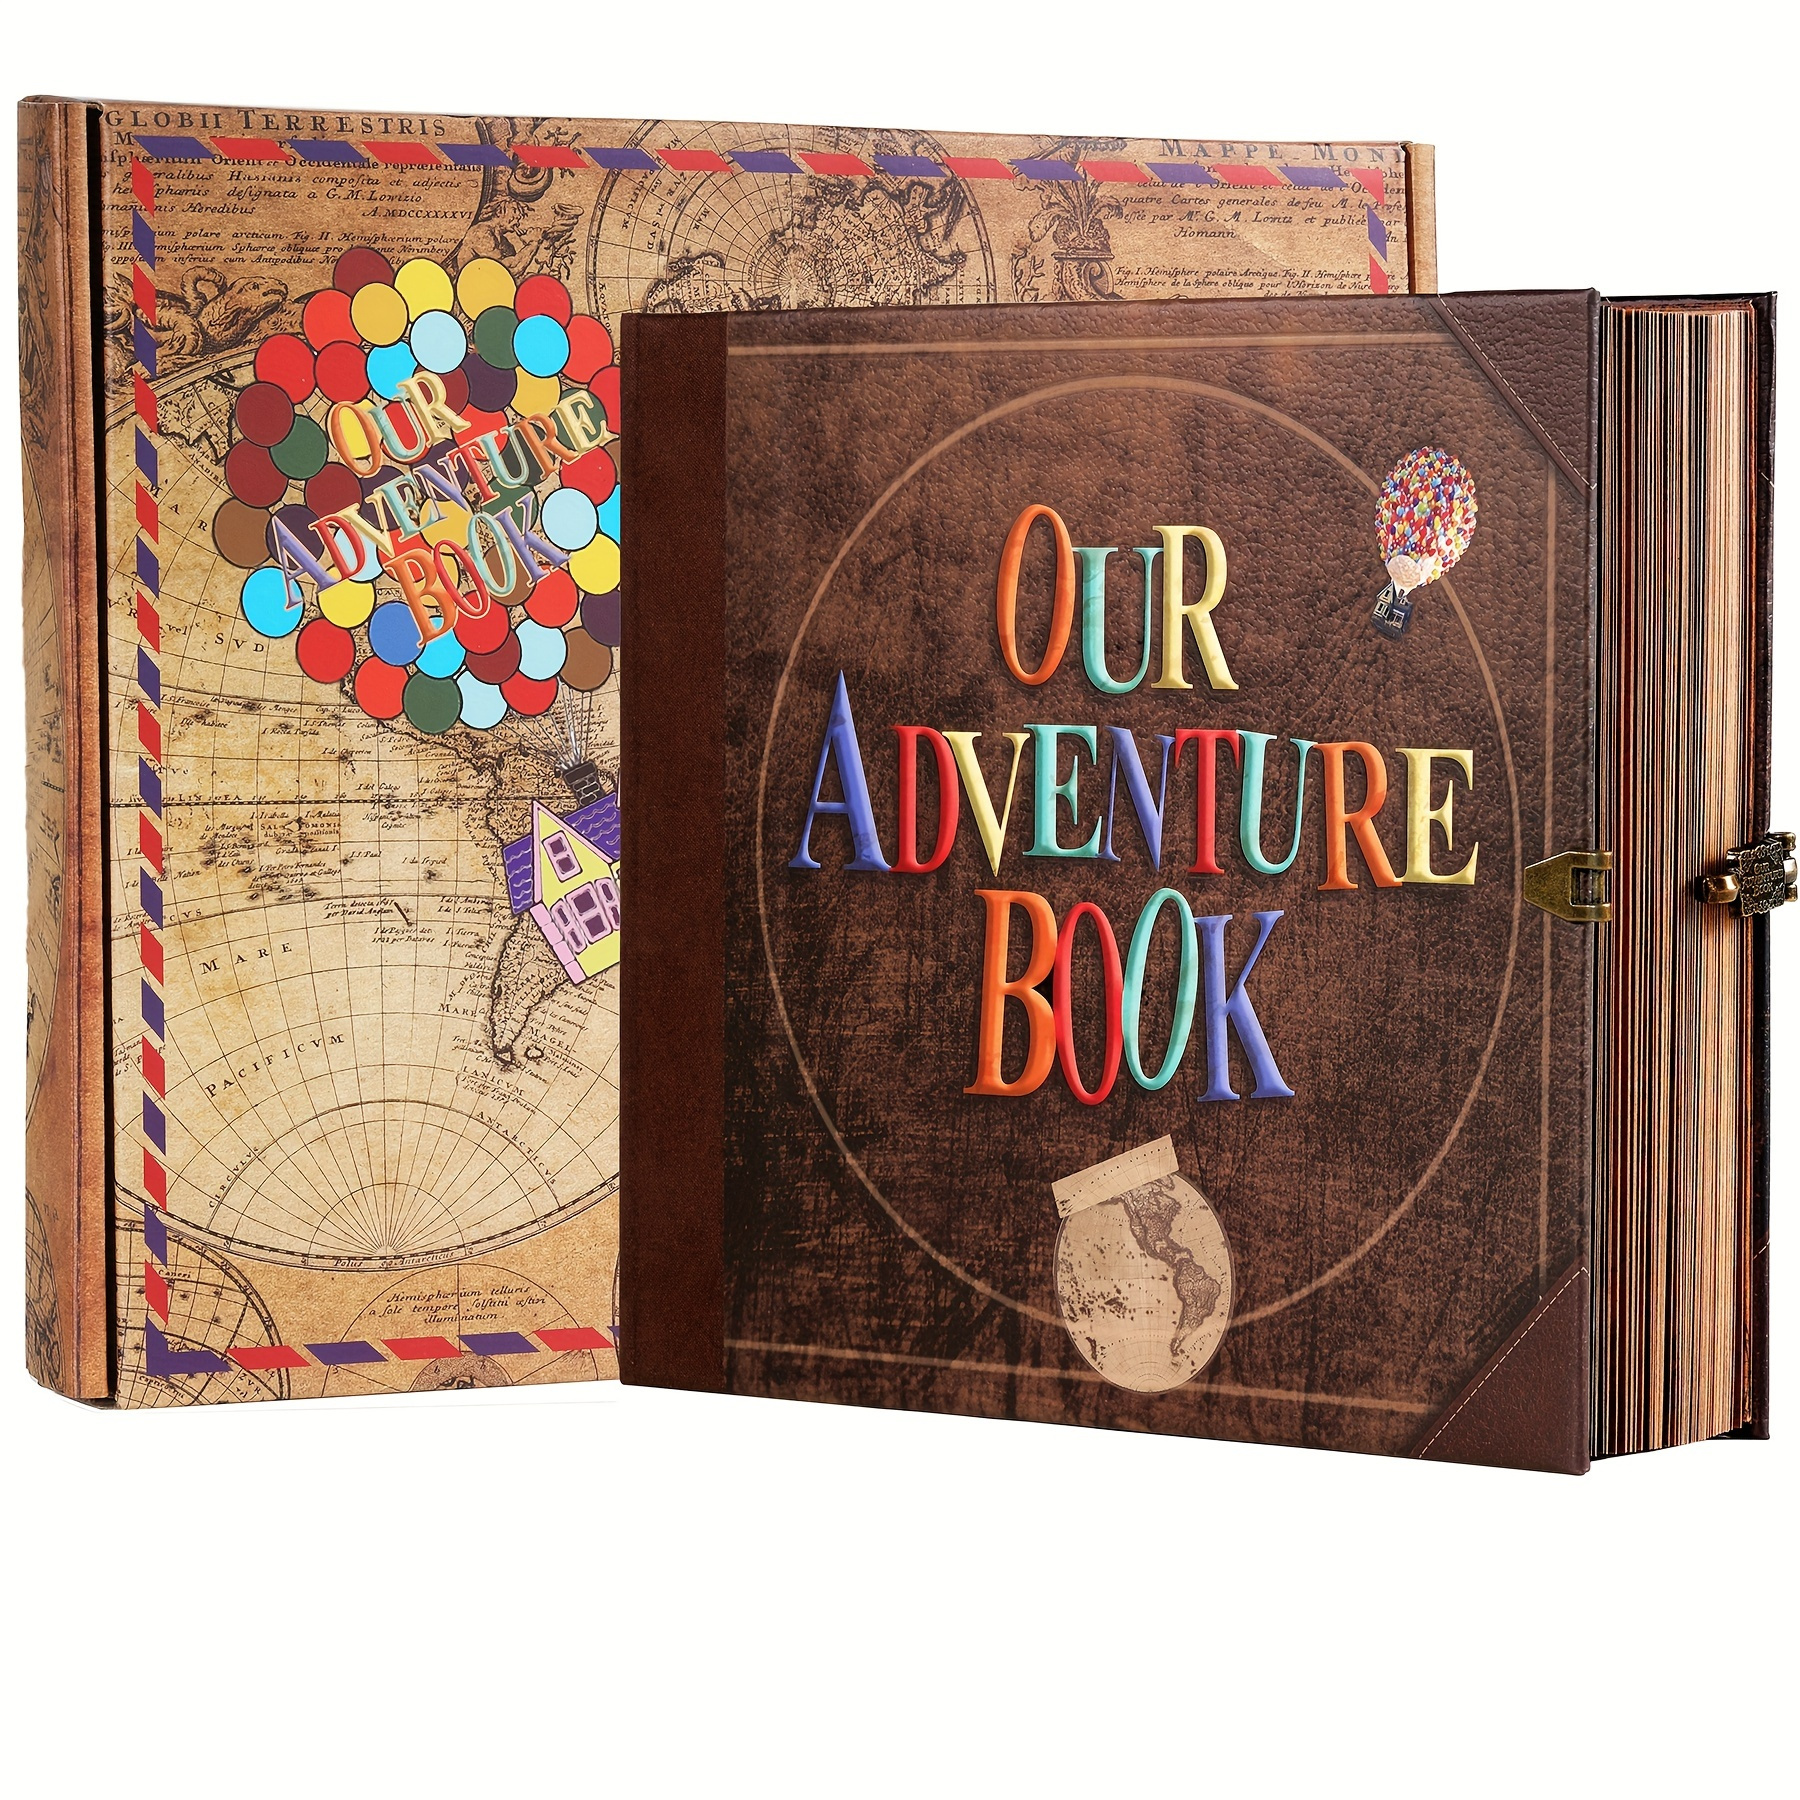  Adventure Archive Box, Travel Shadow Box Ticket